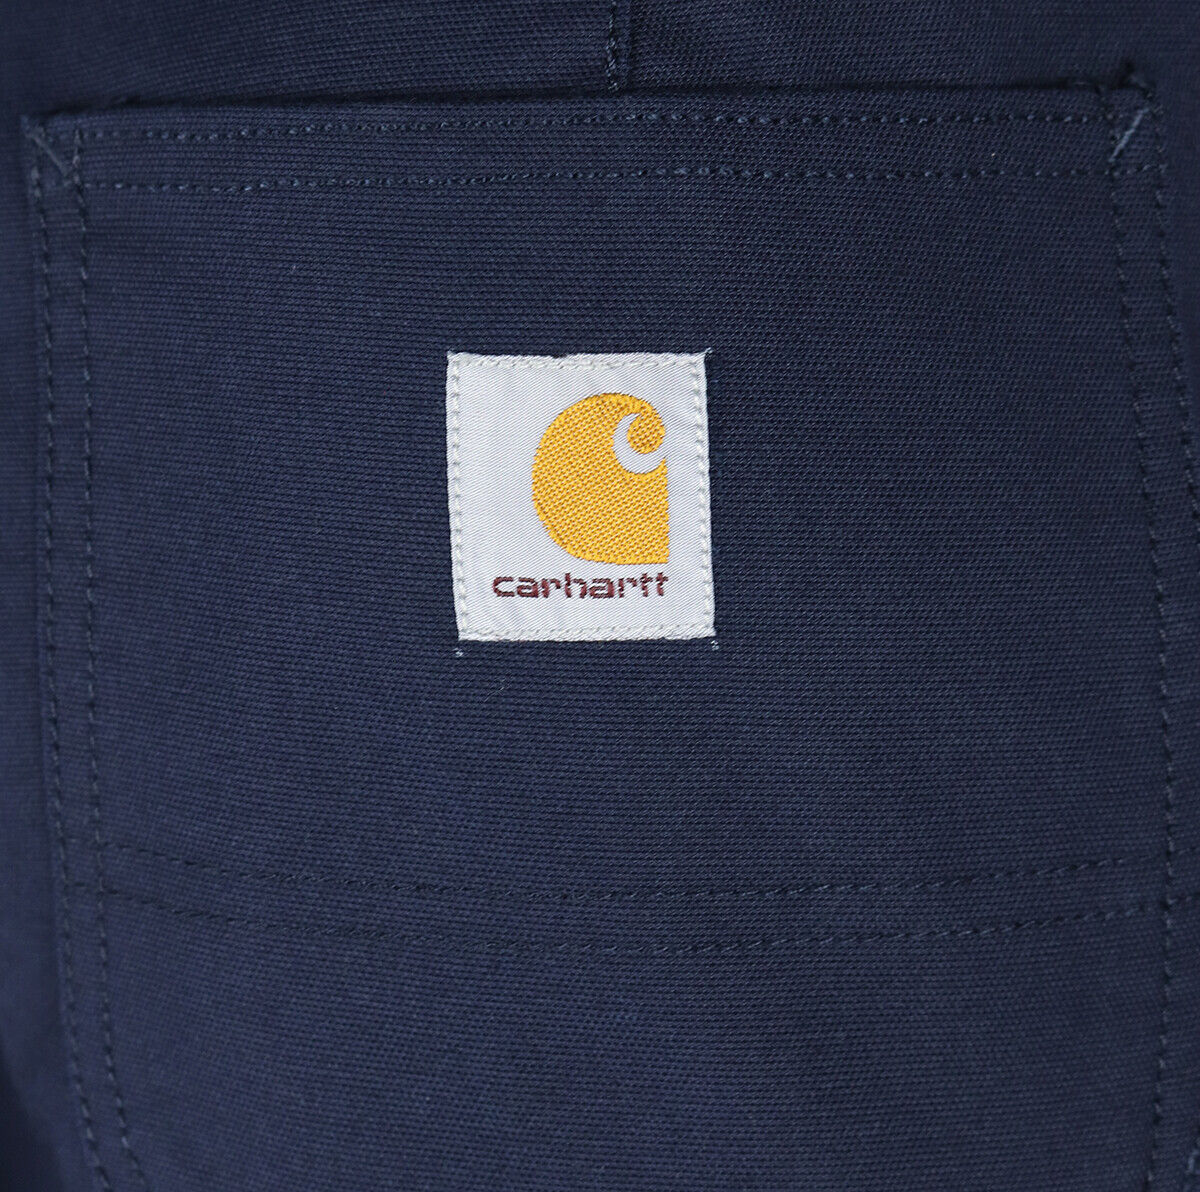 Carhartt Men's Navy Rugged Flex Cargo Pants (S01)